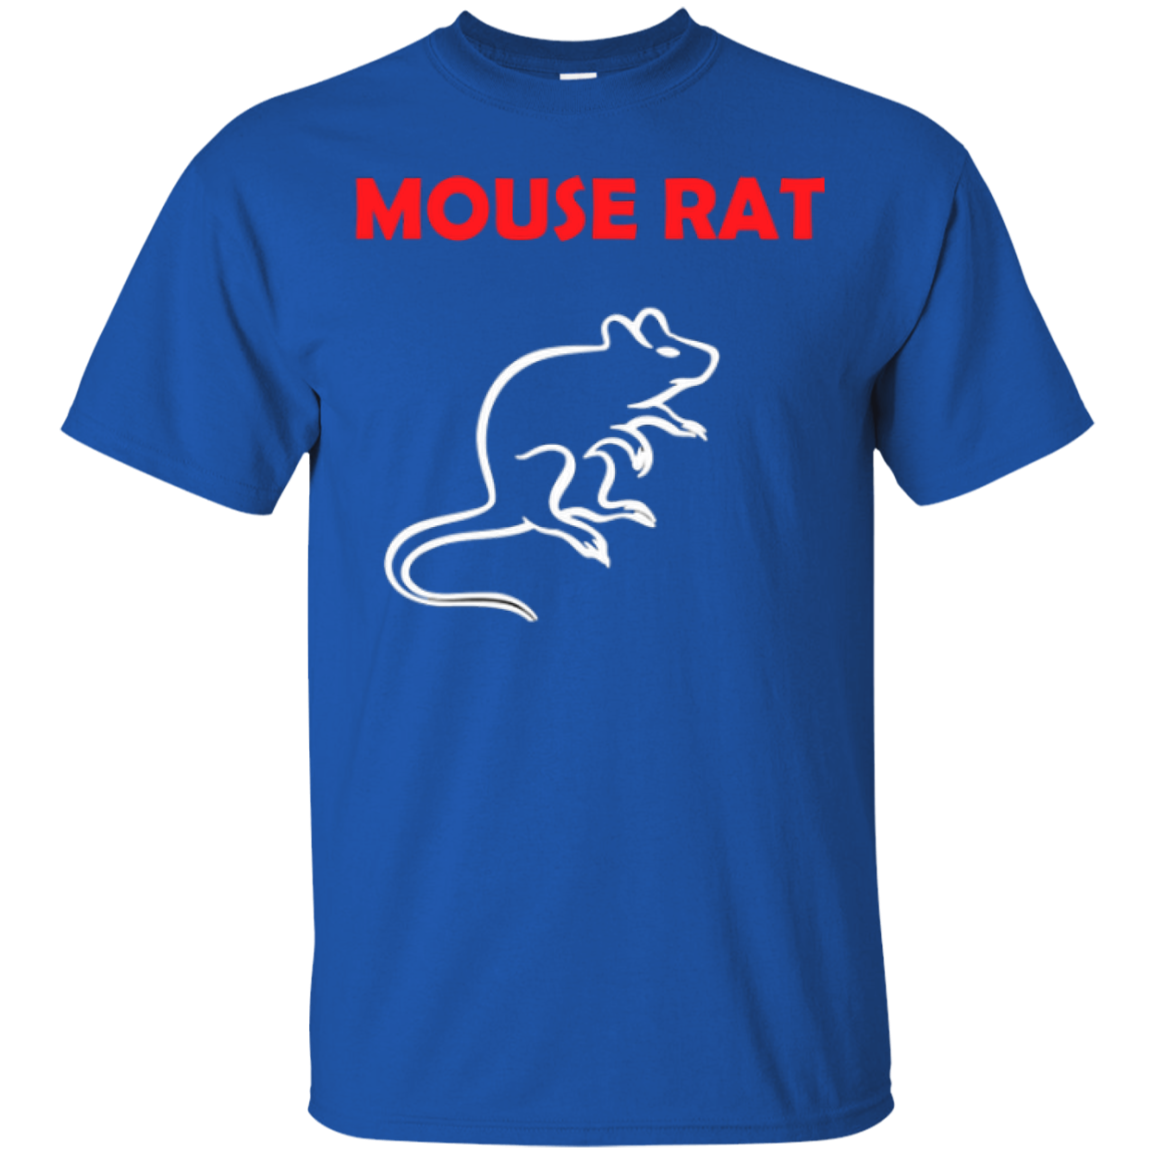 Mouse Rat Shirt, Hoodies, Tanks